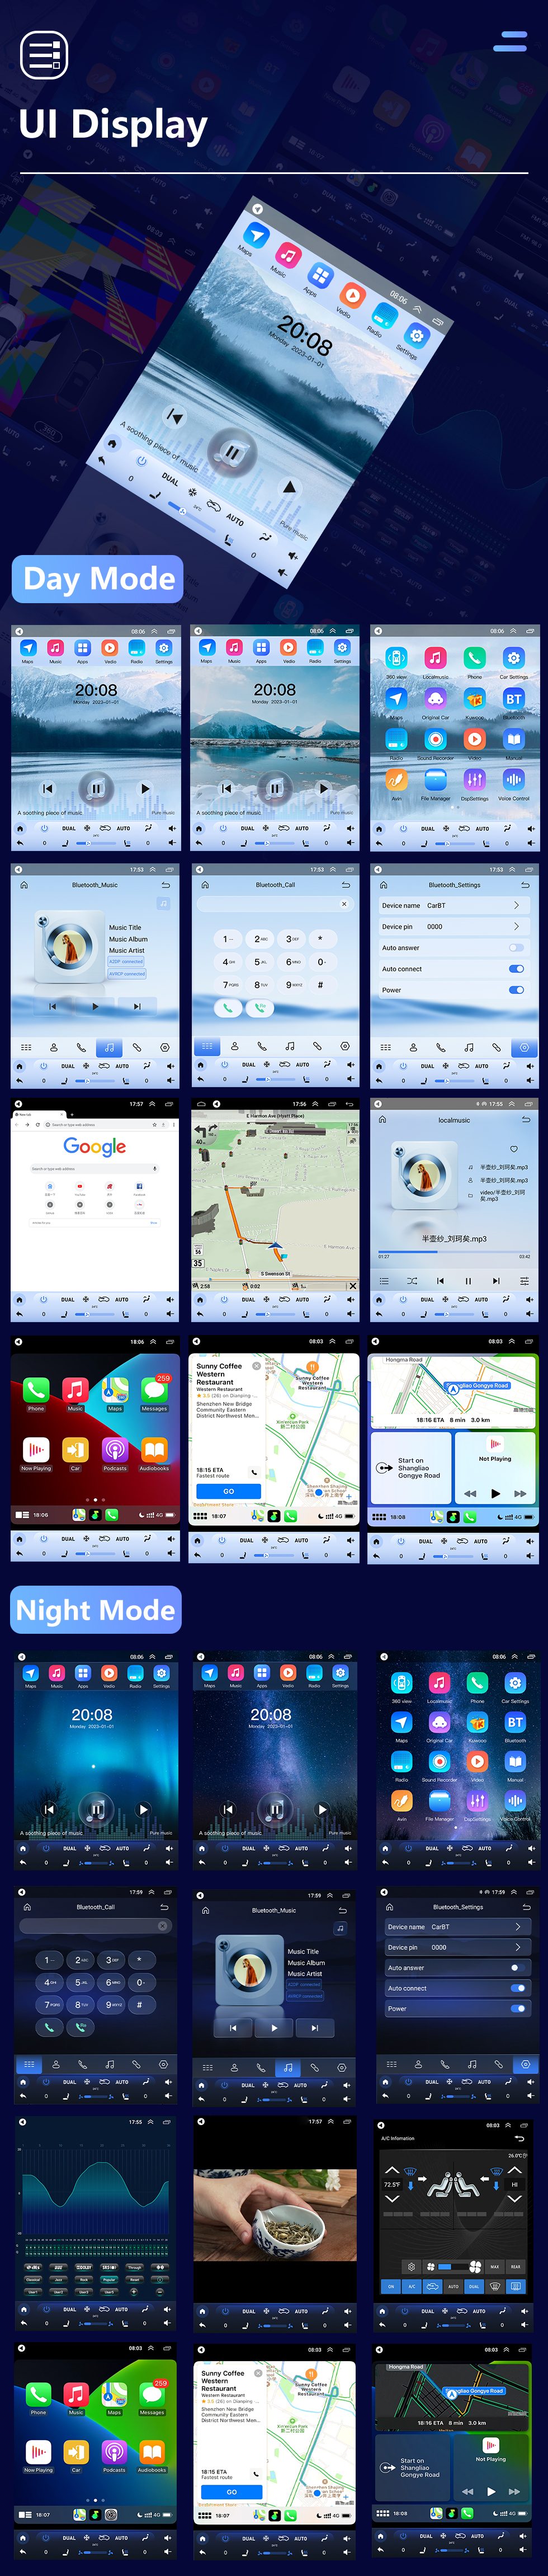 Seicane 2006-2012 Nissan Sylphy 9,7 Zoll Android 10.0 GPS Navigationsradio mit Touchscreen Bluetooth USB WIFI Unterstützung Carplay Rückfahrkamera